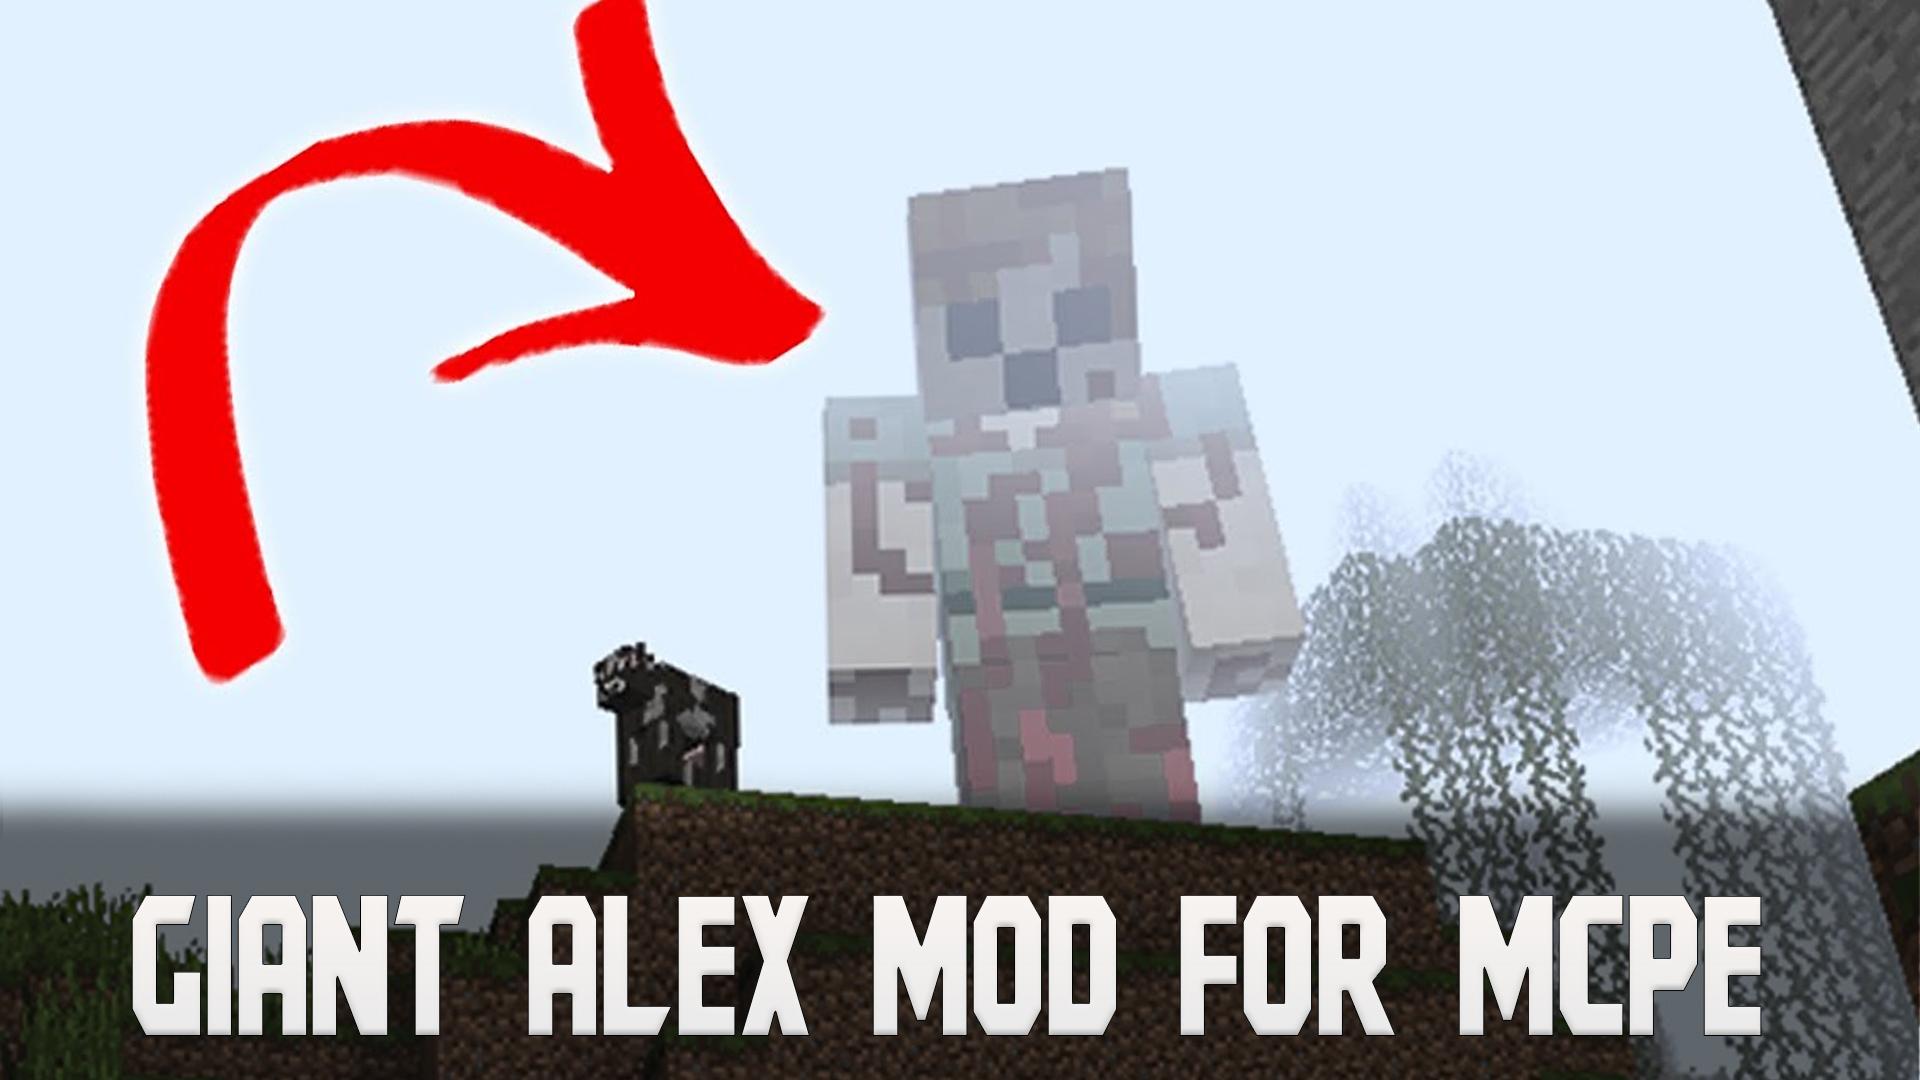 Giant Alex Minecraft. Alex Mod Minecraft. Giant Alex. Игрушки Alex Mods Minecraft. Алекс модс